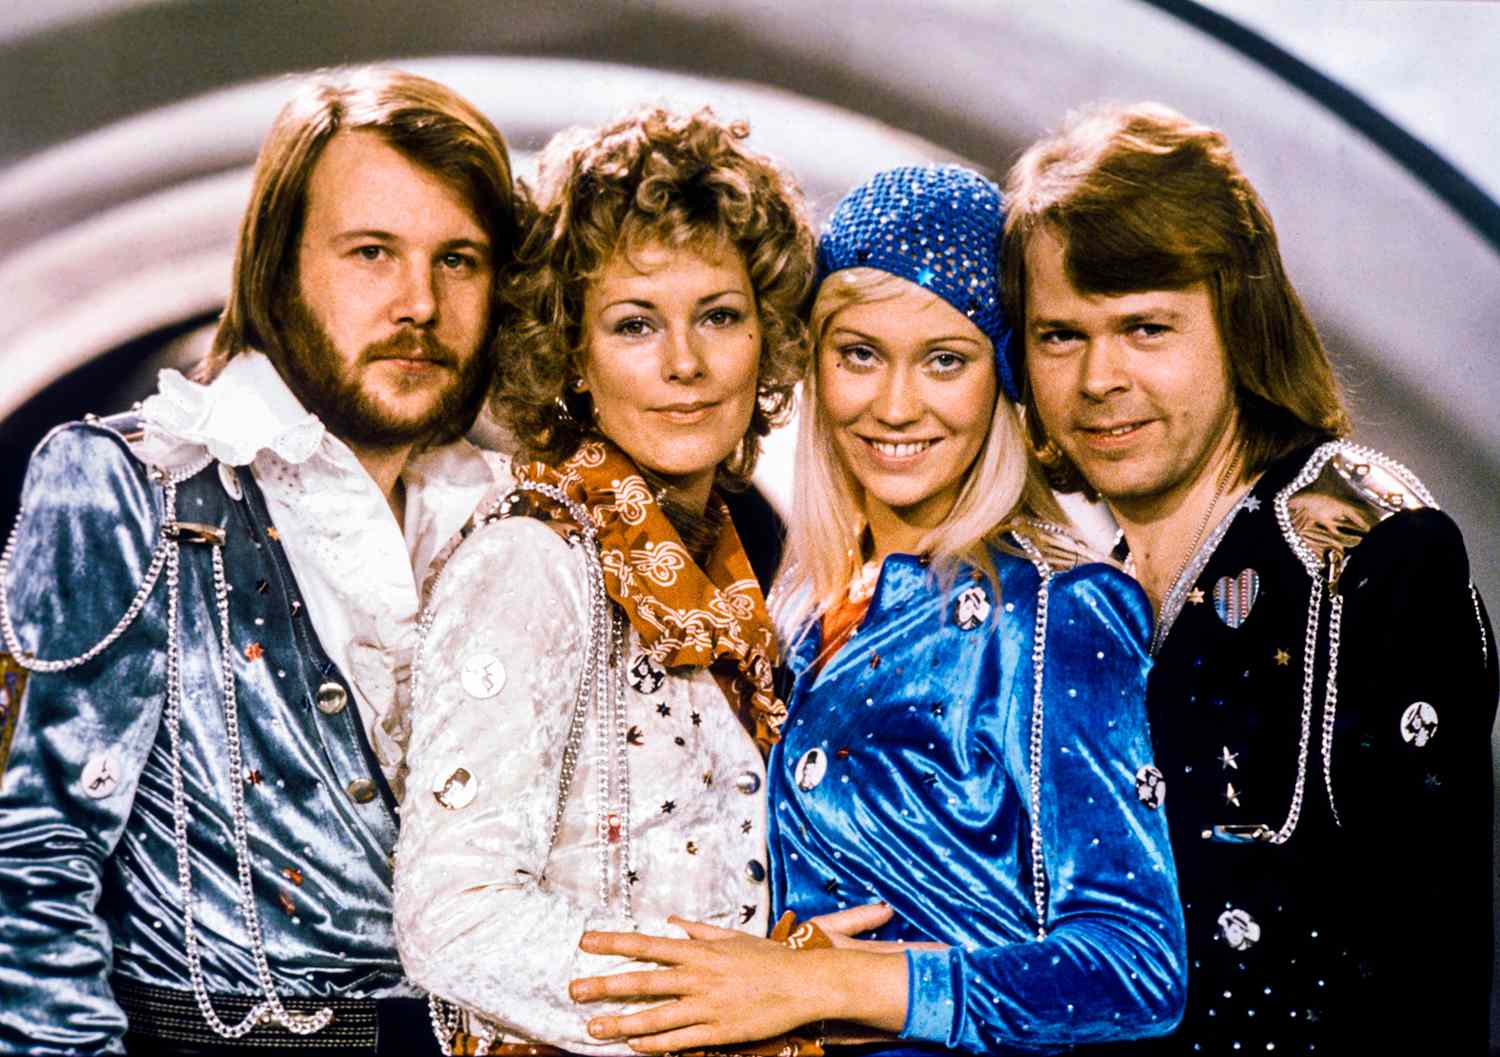 Eπανένωση για τους ABBA που  τιμήθηκαν με ένα διάσημο σουηδικό παράσημο για την ποπ καριέρα τους που ξεκίνησε στη Eurovision